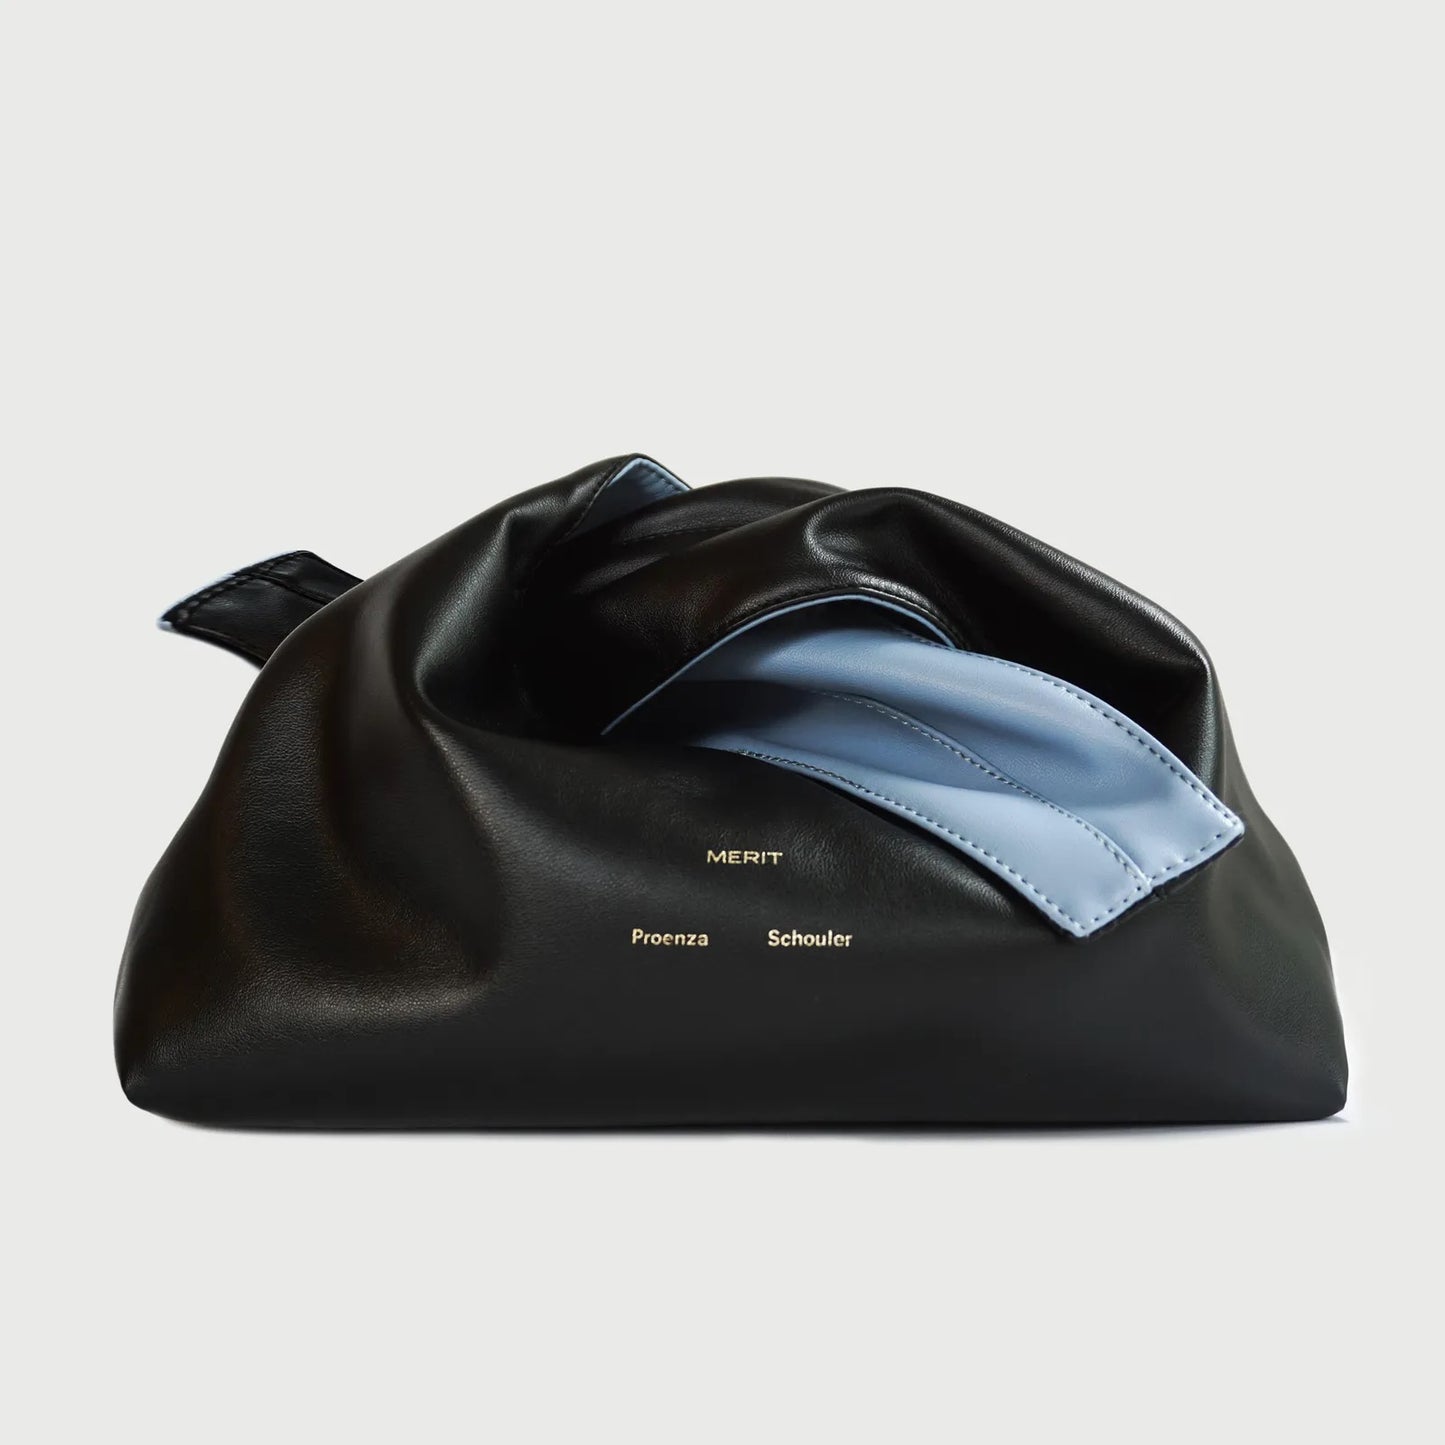 PROENZA SCHOULER x MERIT limited edition signature bag